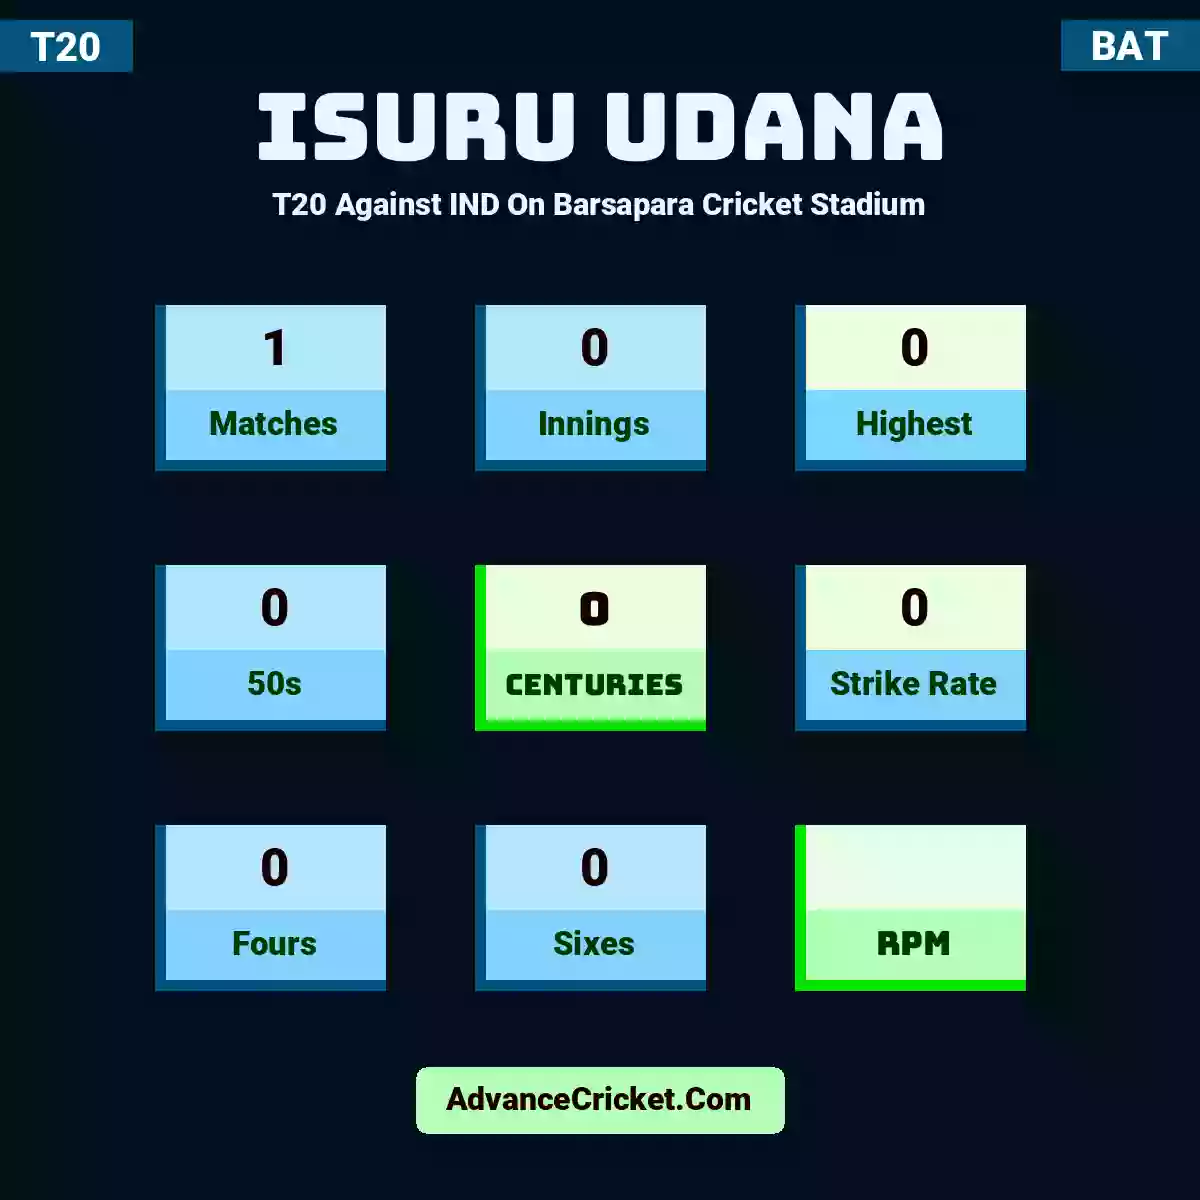 Isuru Udana T20  Against IND On Barsapara Cricket Stadium, Isuru Udana played 1 matches, scored 0 runs as highest, 0 half-centuries, and 0 centuries, with a strike rate of 0. I.Udana hit 0 fours and 0 sixes.